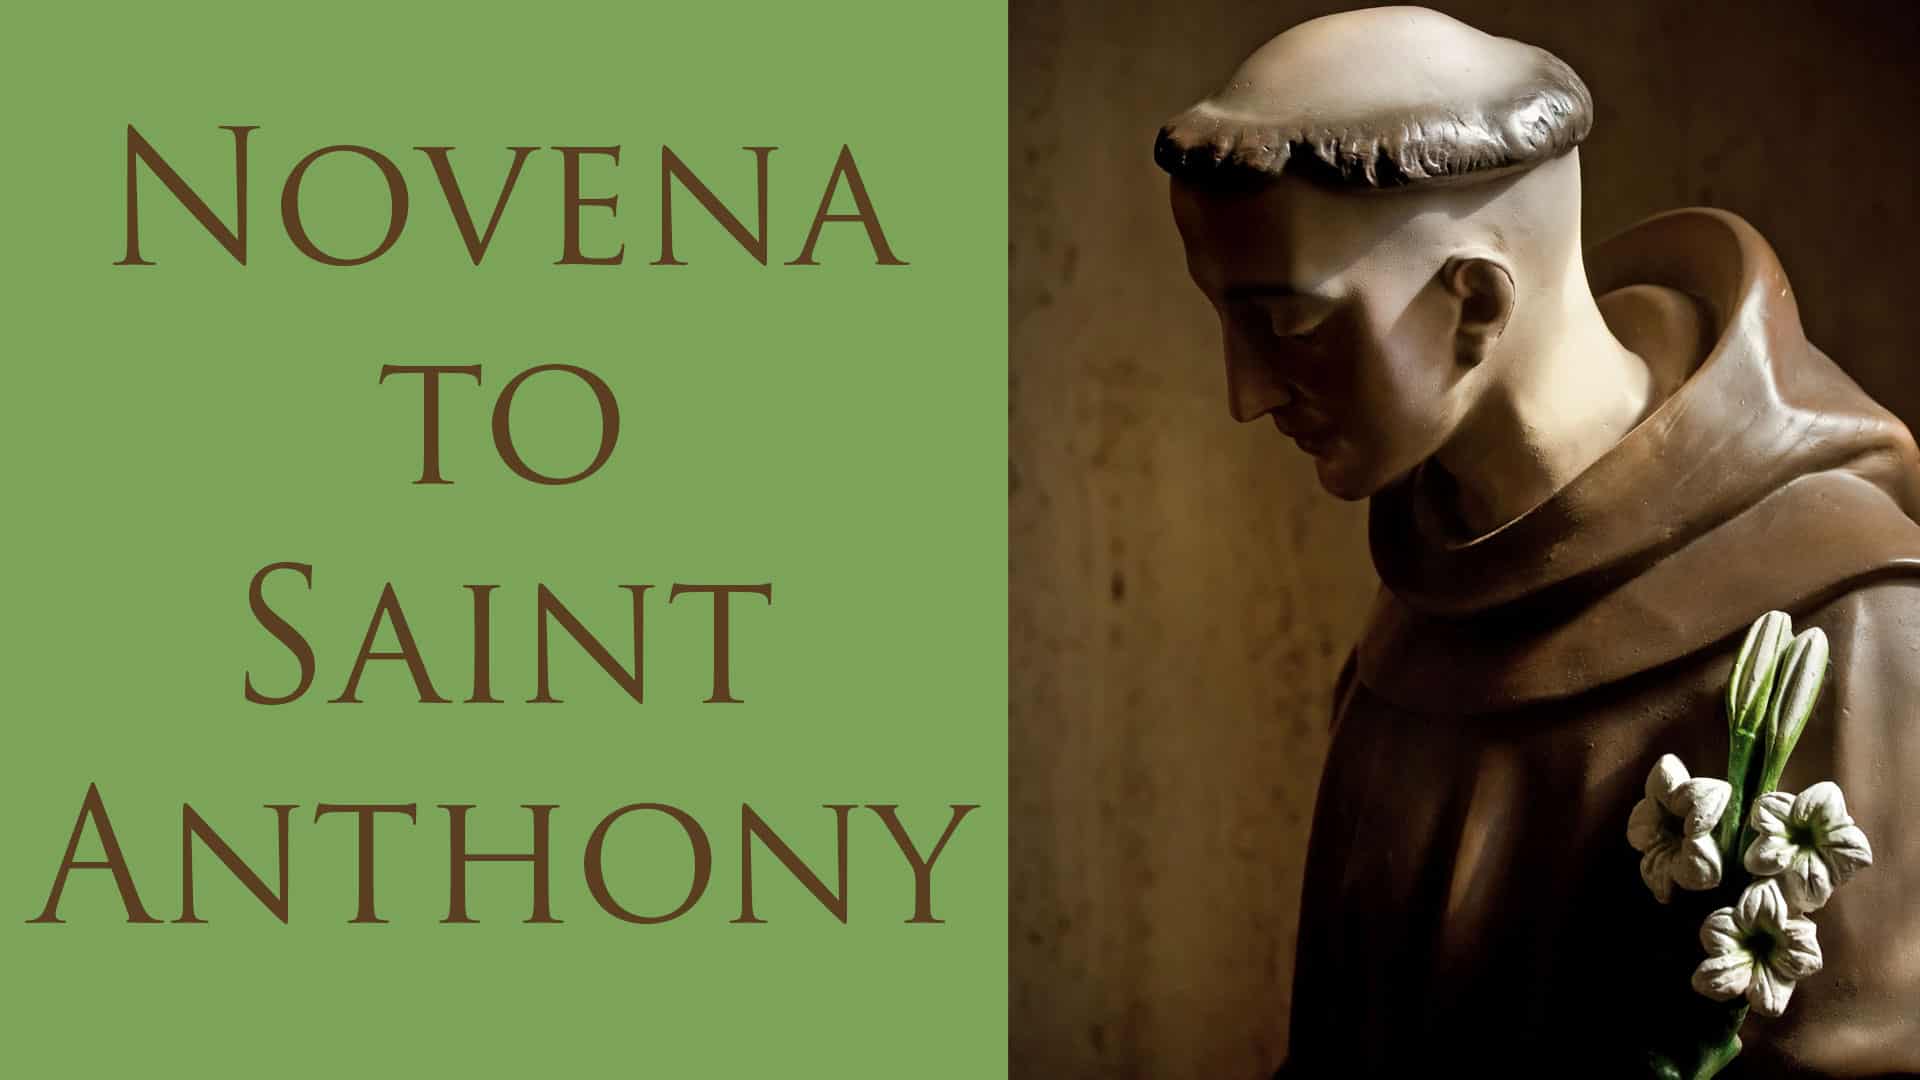 Graphic that says "Novena To Saint Anthony"